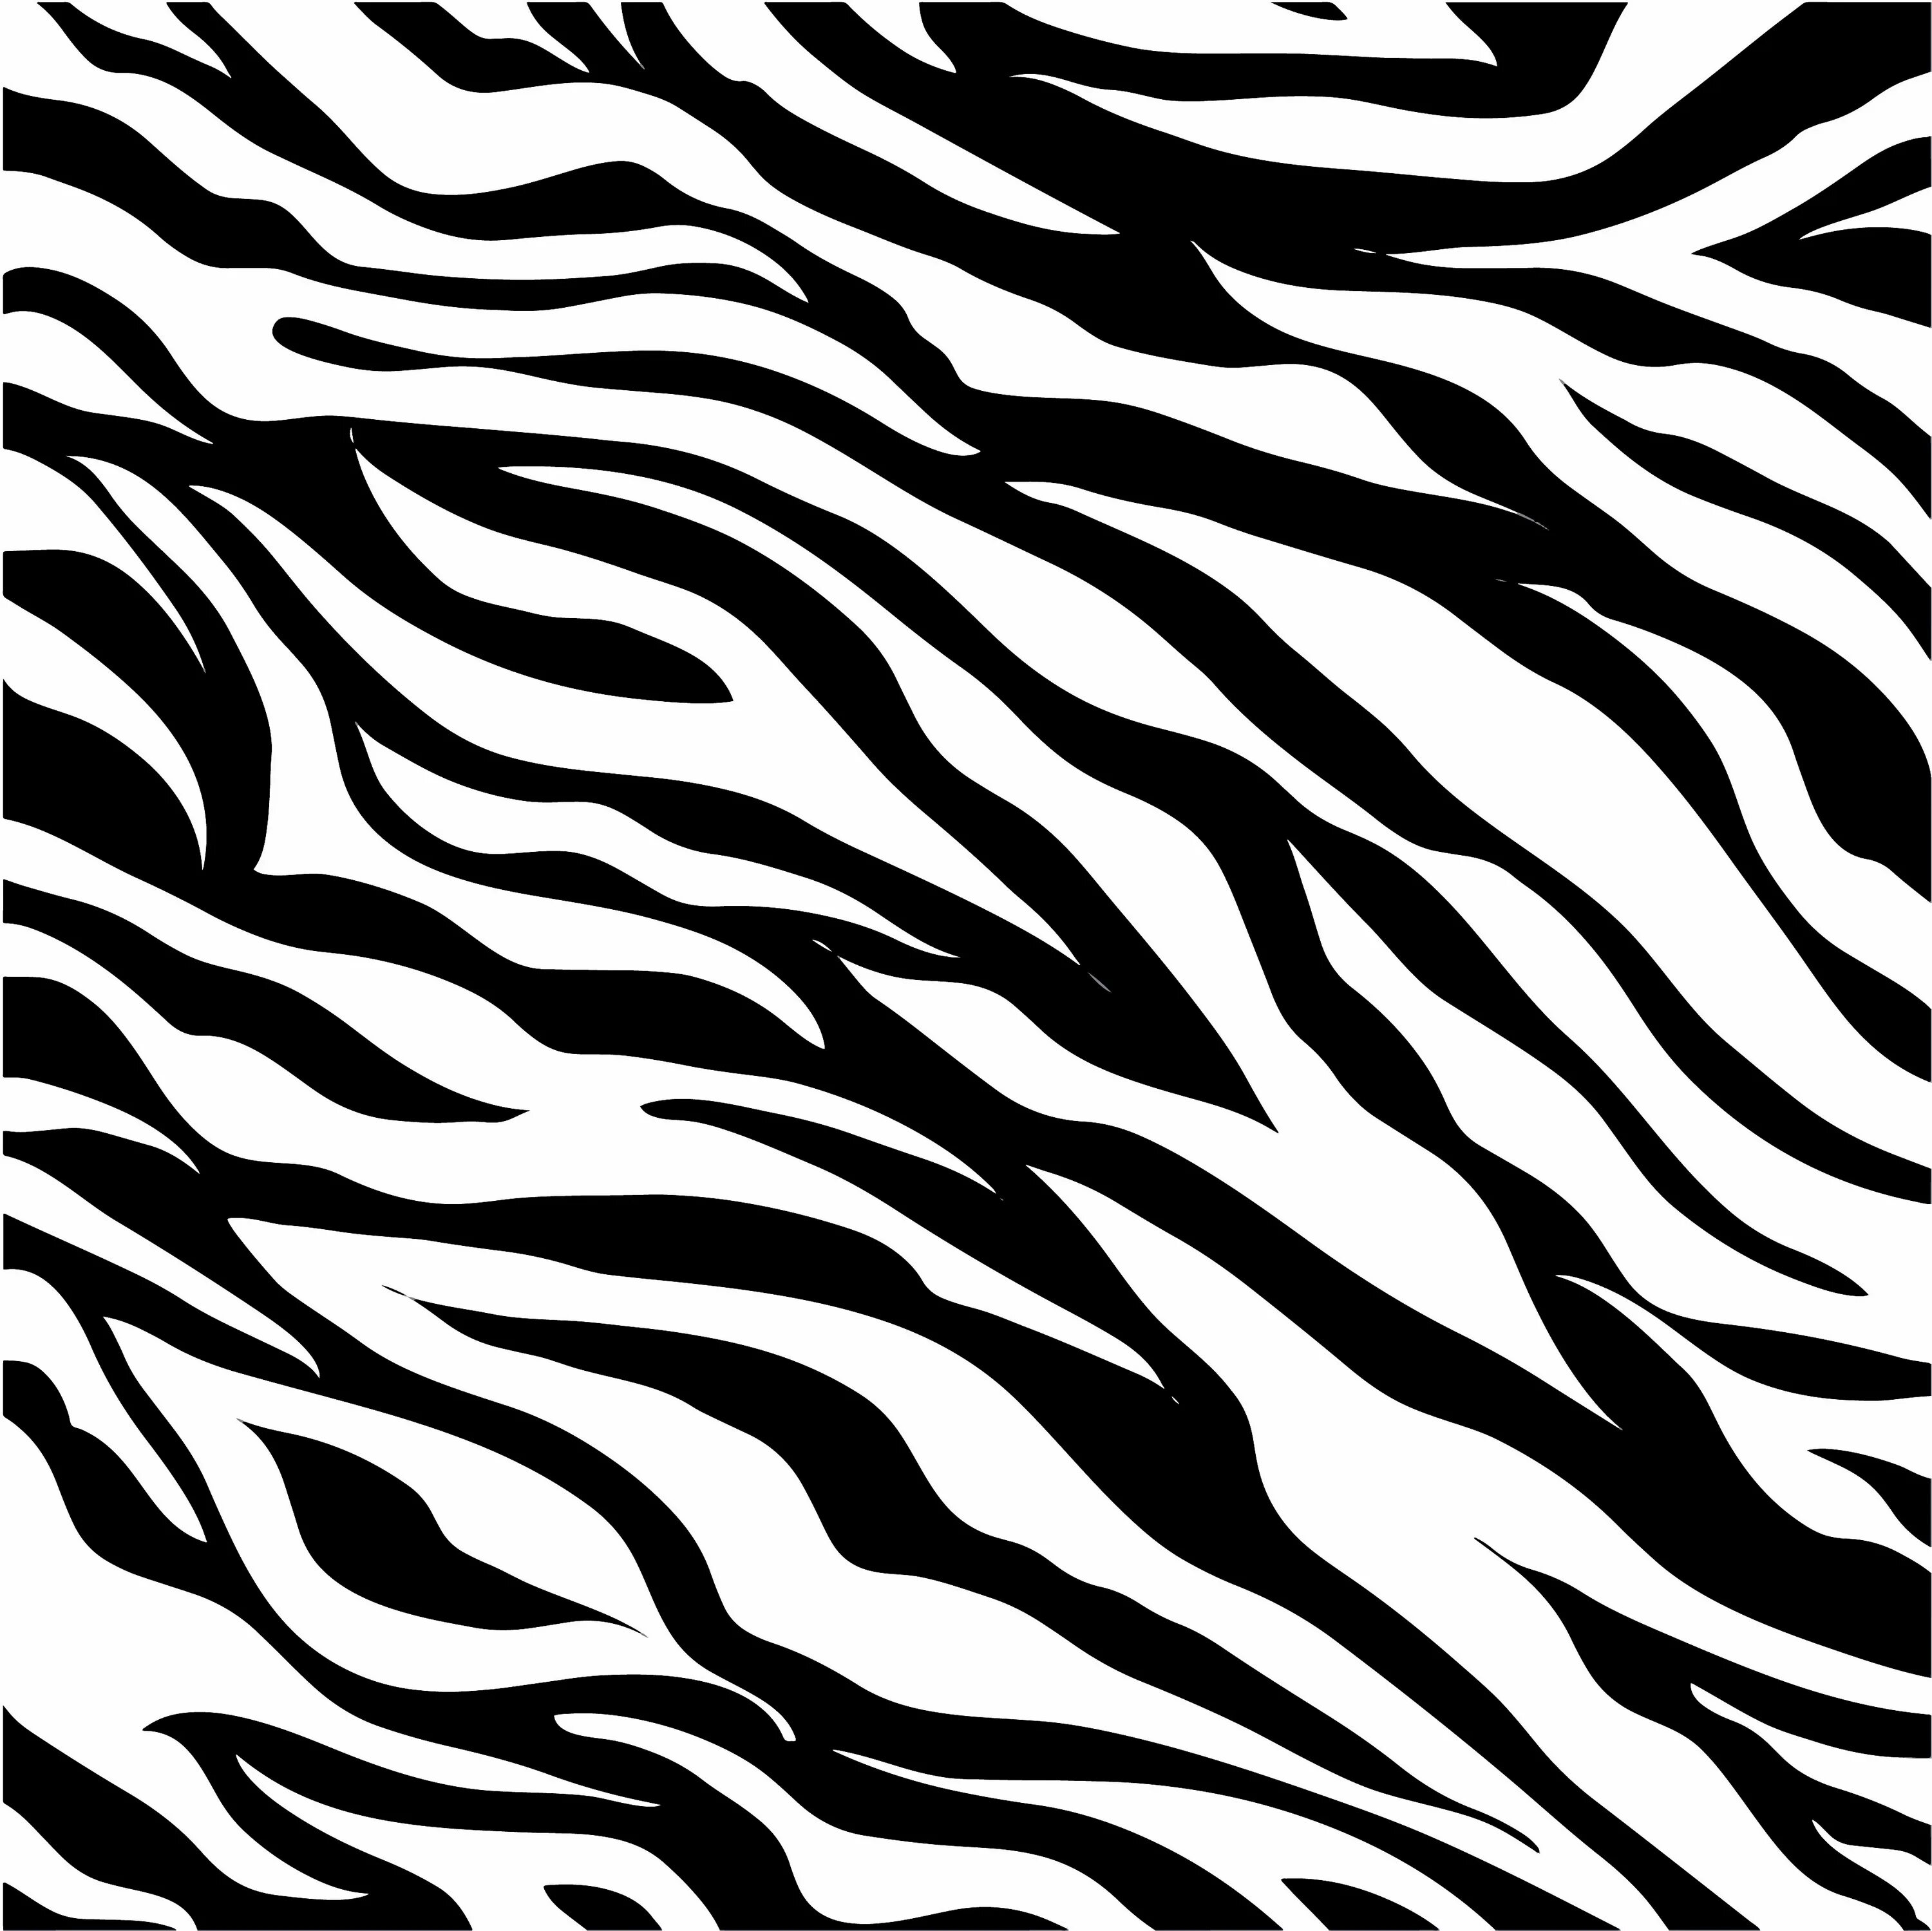 Animal pattern. Зебра паттерн. Пятна зебры. Тигровые принты. Орнамент Зебра.